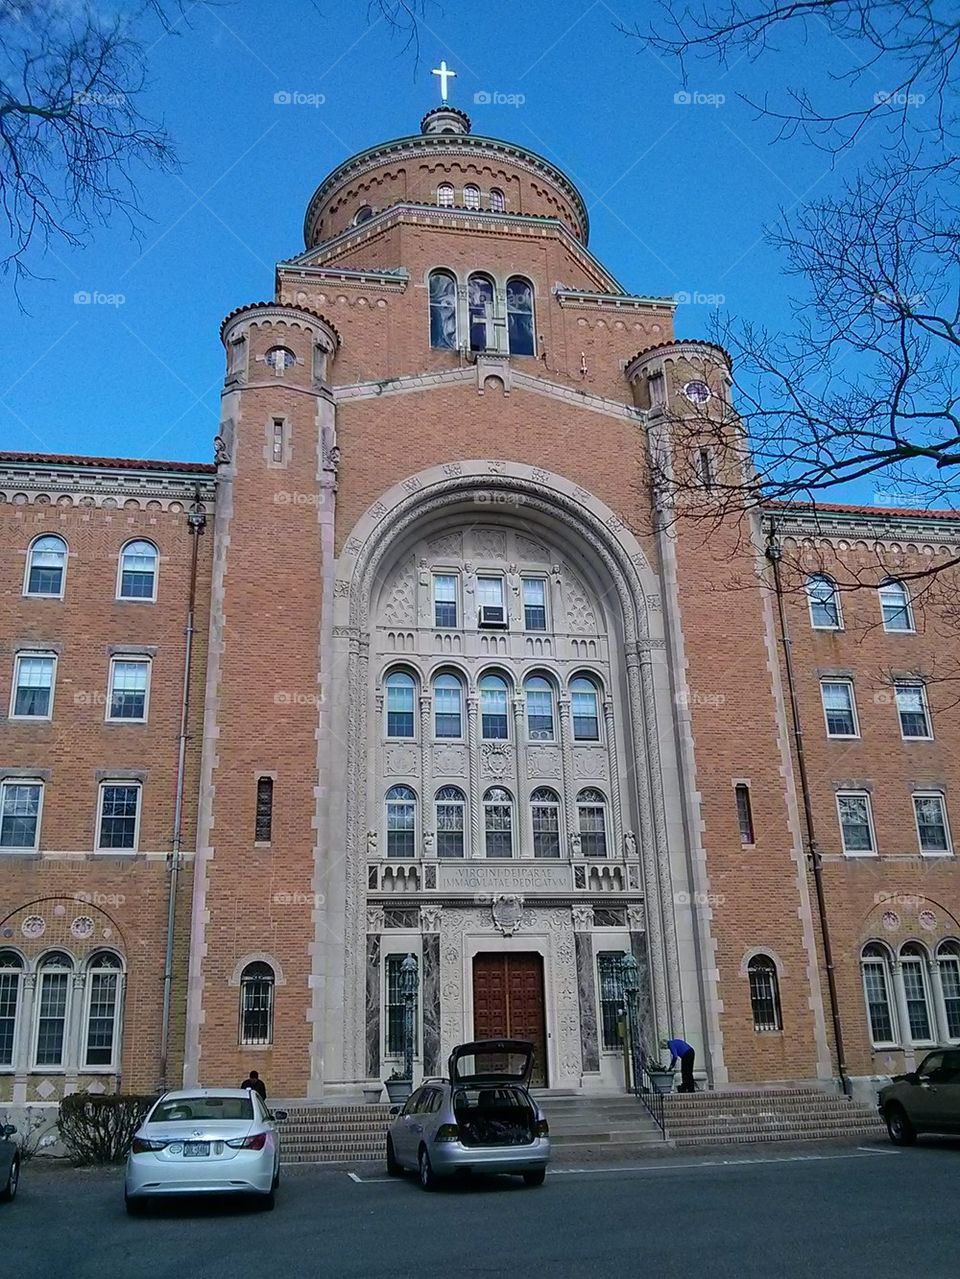 Immaculate Concepcion Seminary